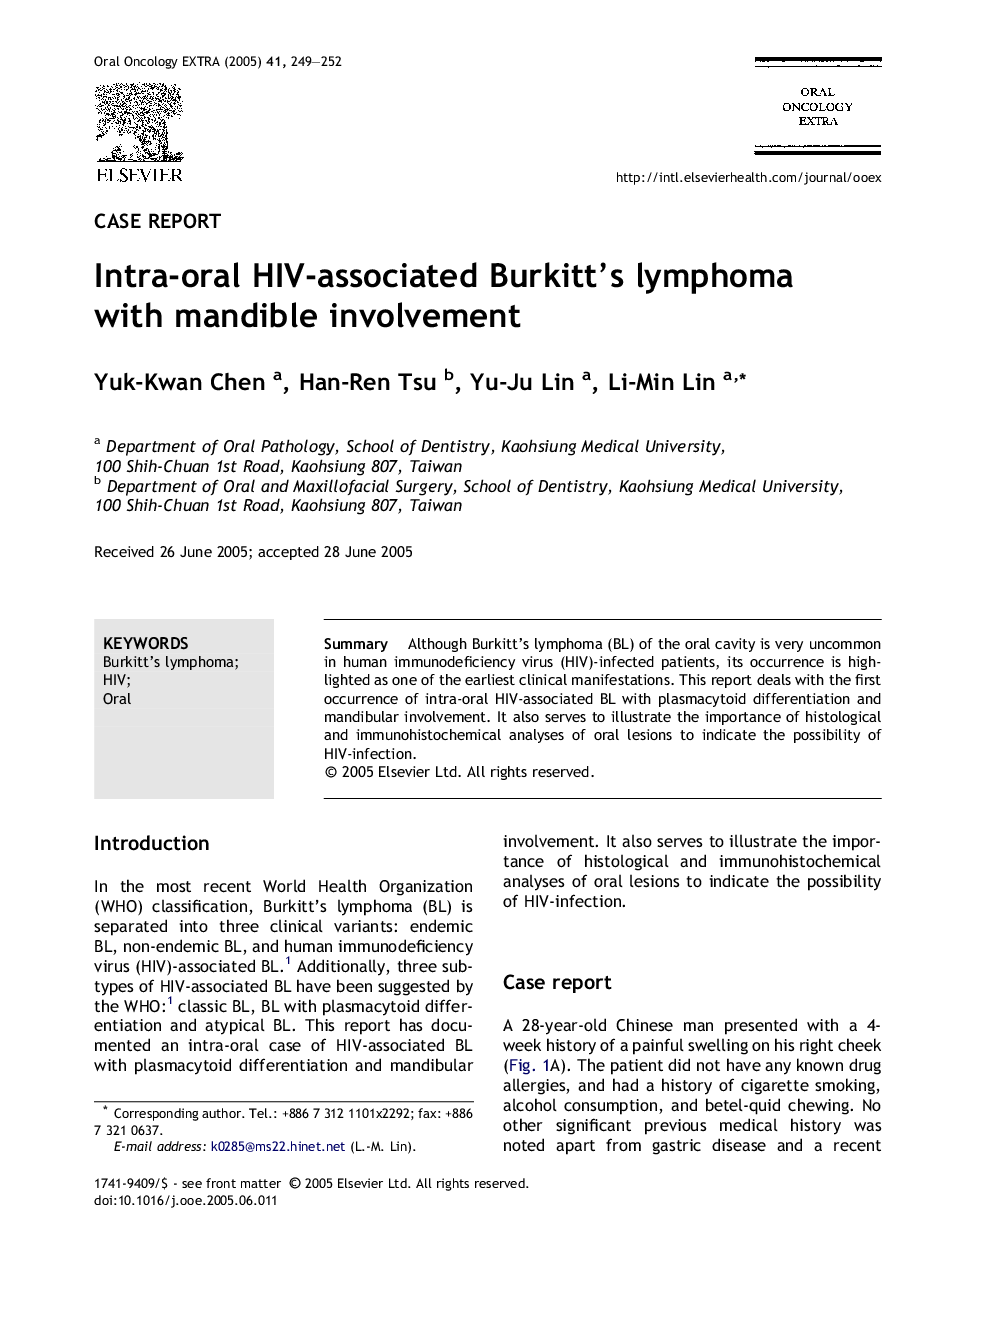 Intra-oral HIV-associated Burkitt's lymphoma with mandible involvement